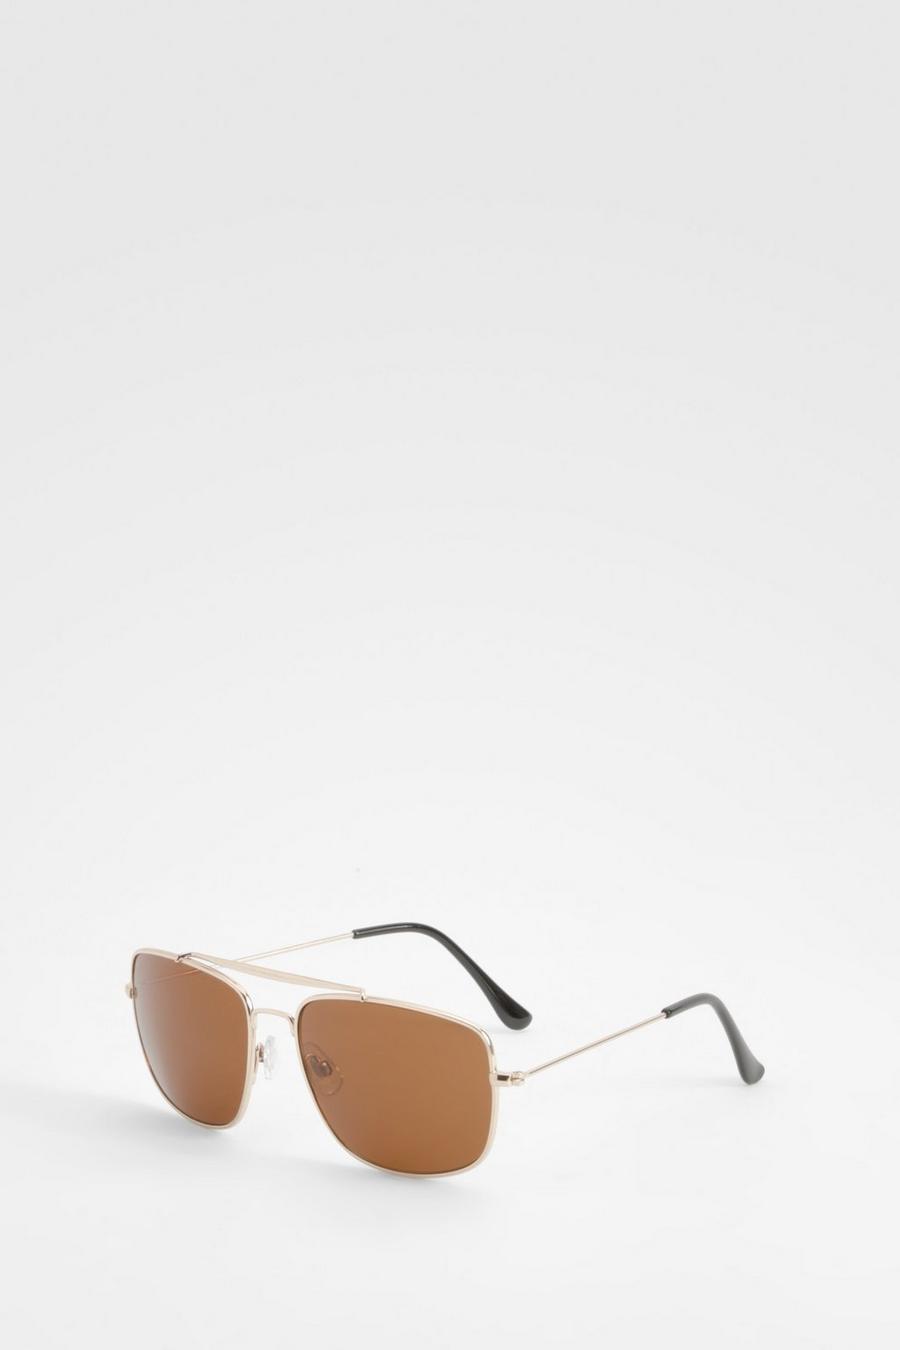 Gold Tinted Lens Aviator Sunglasses